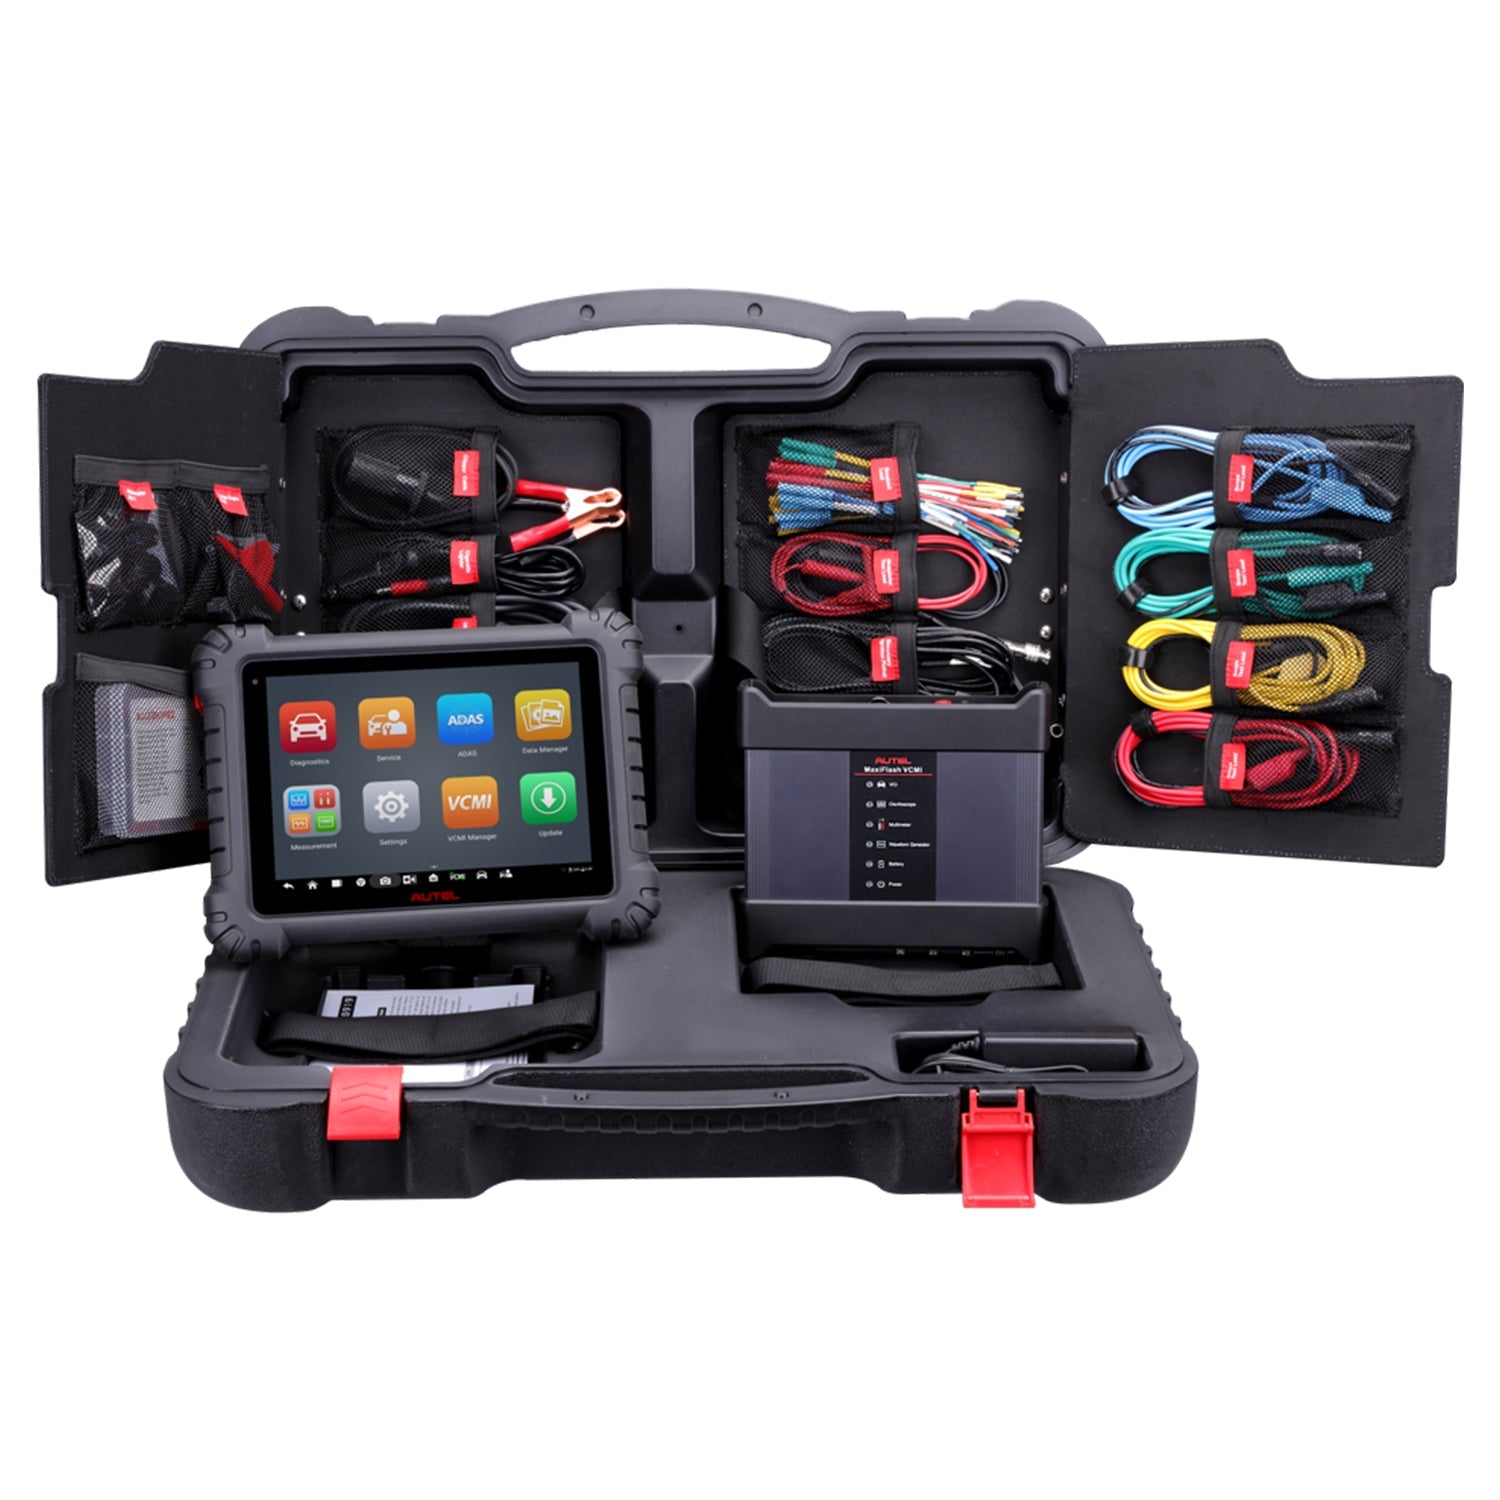 Autel MaxiSYS MS919 Automotive Diagnostic Tool Full Kit